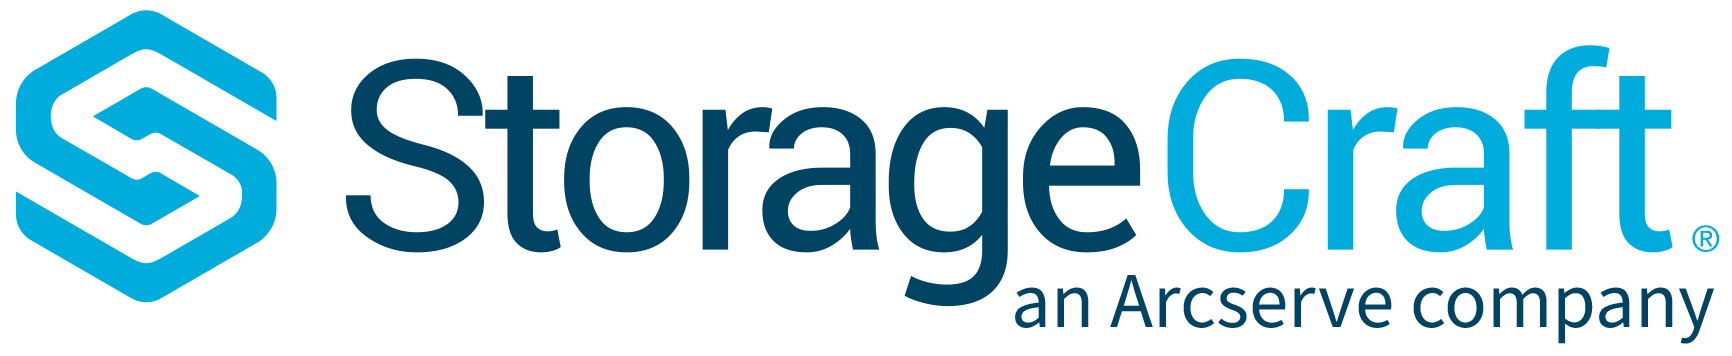 StorageCraft Arcserve logo color-HORZ.png